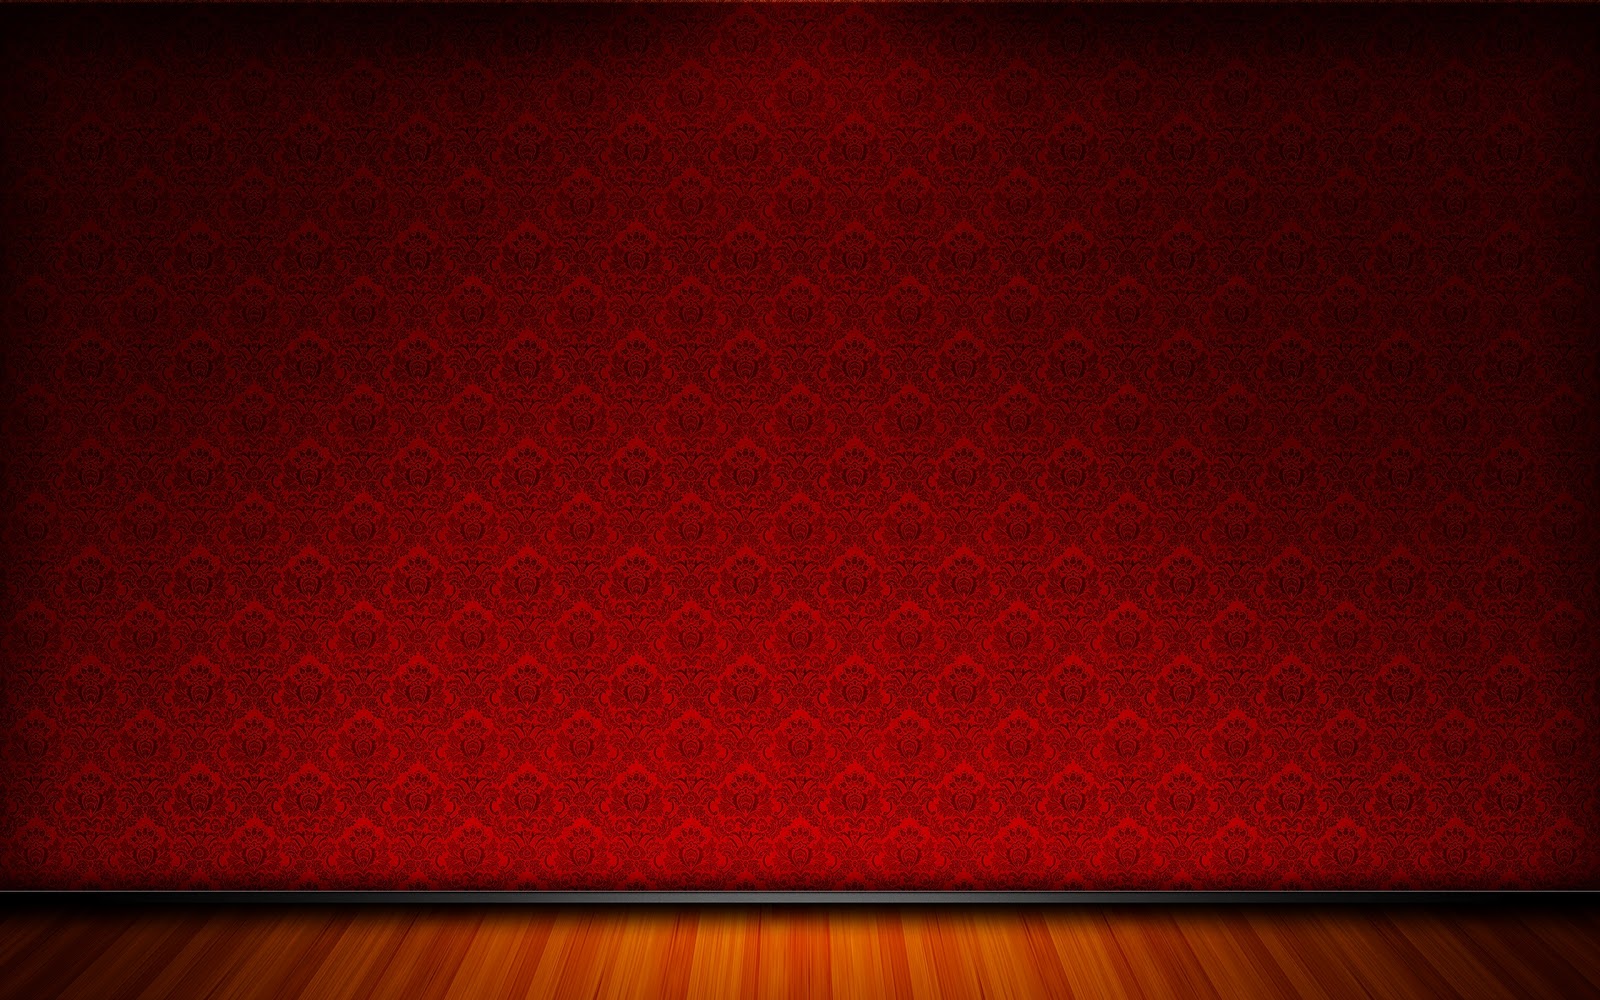  best top desktop red wallpapers red wallpaper red background hd 11jpg